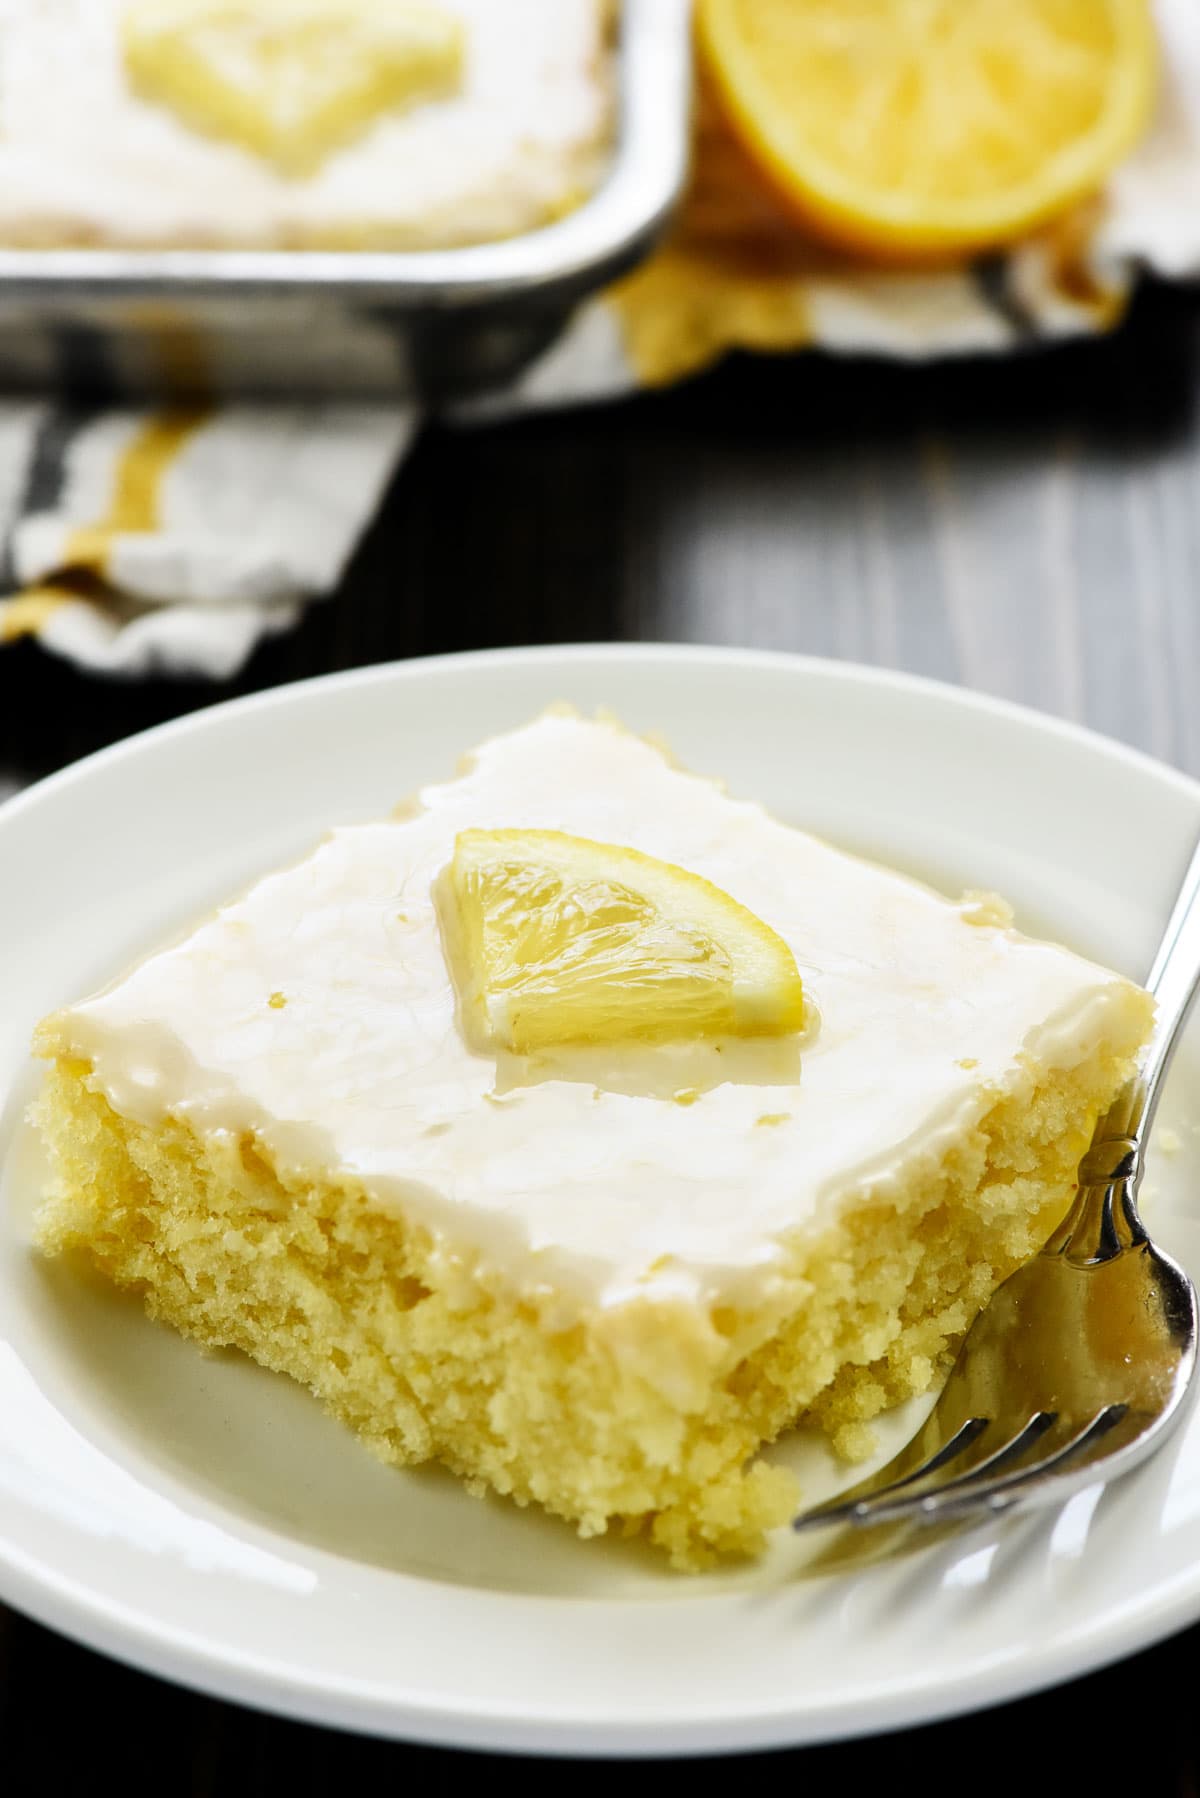 Slice of Lemon Sheet Cake with lemon glaze on plate.